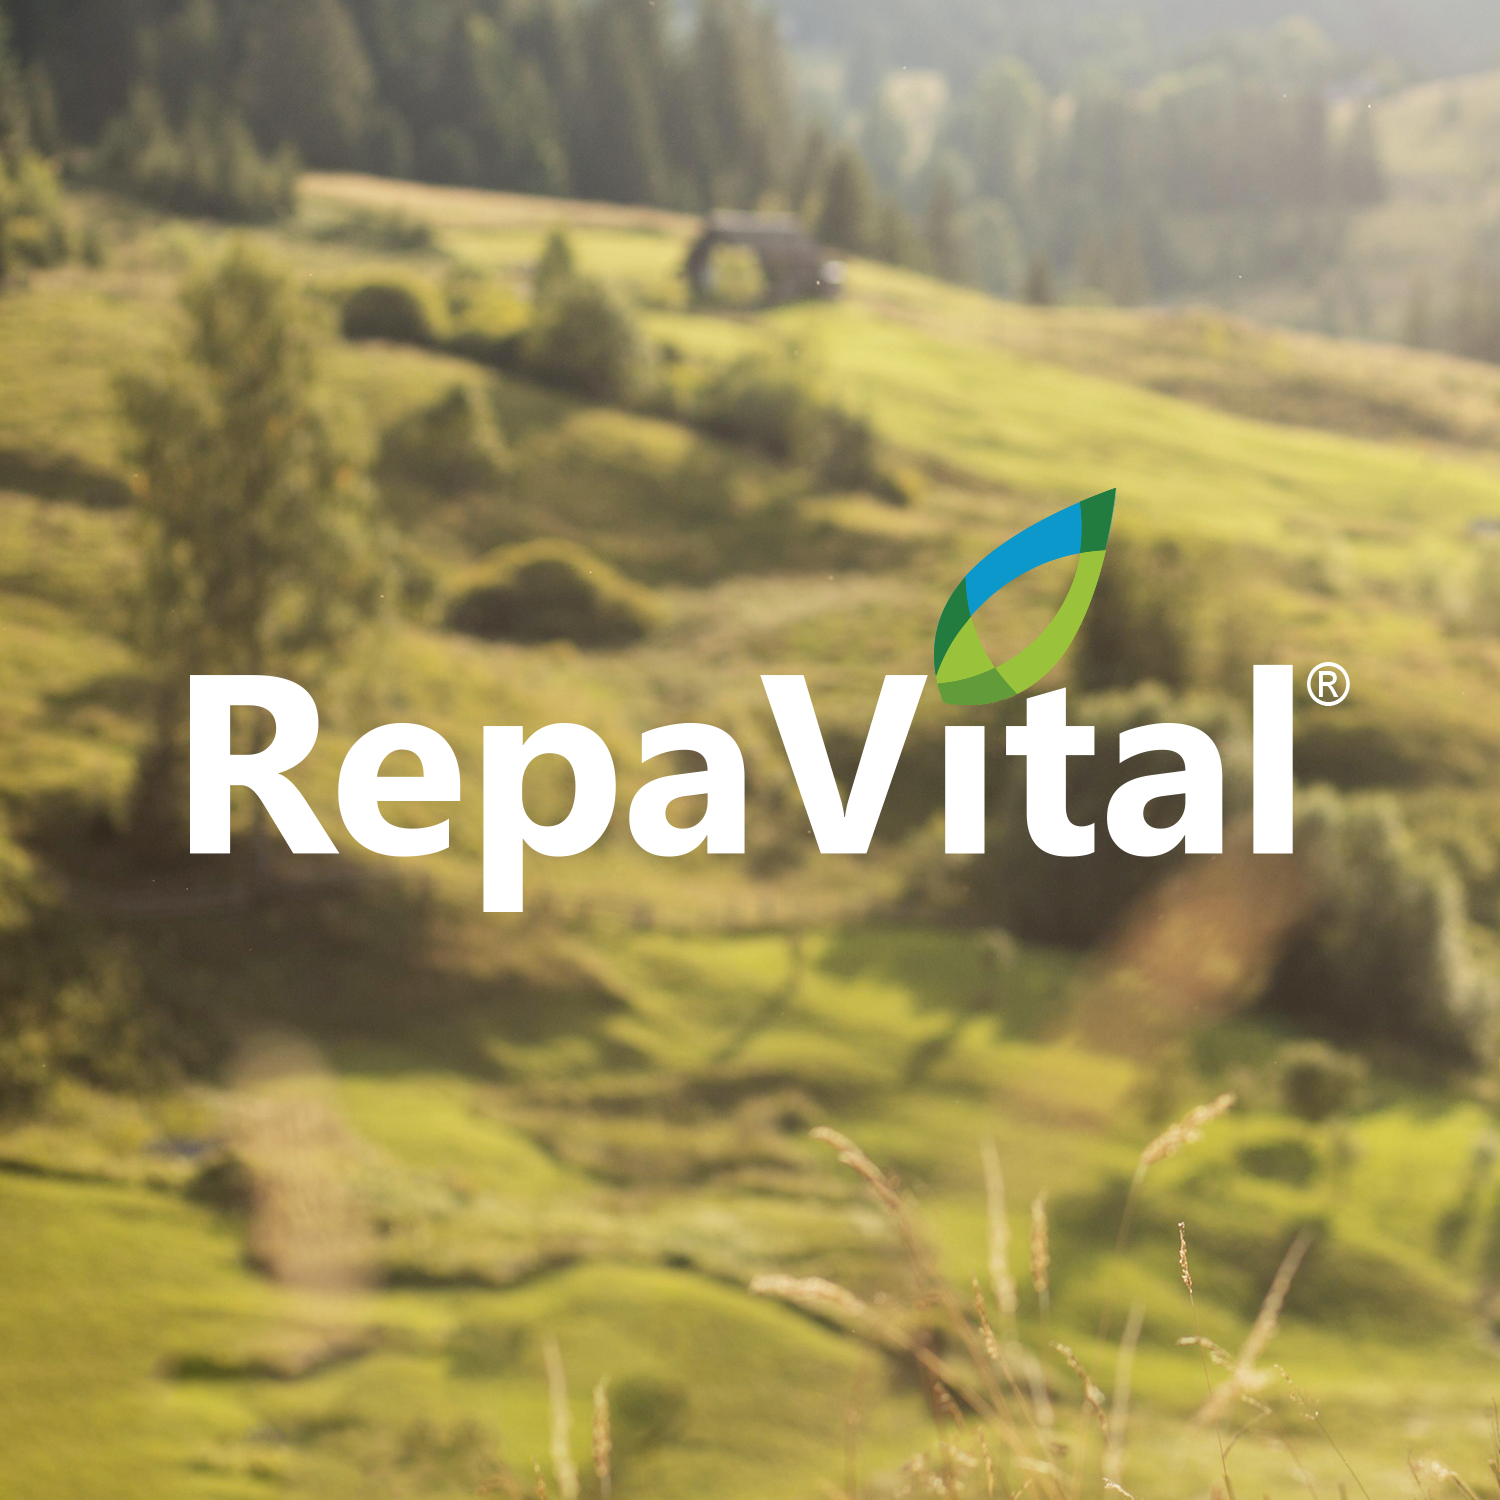 RepaVital – Das Unternehmen